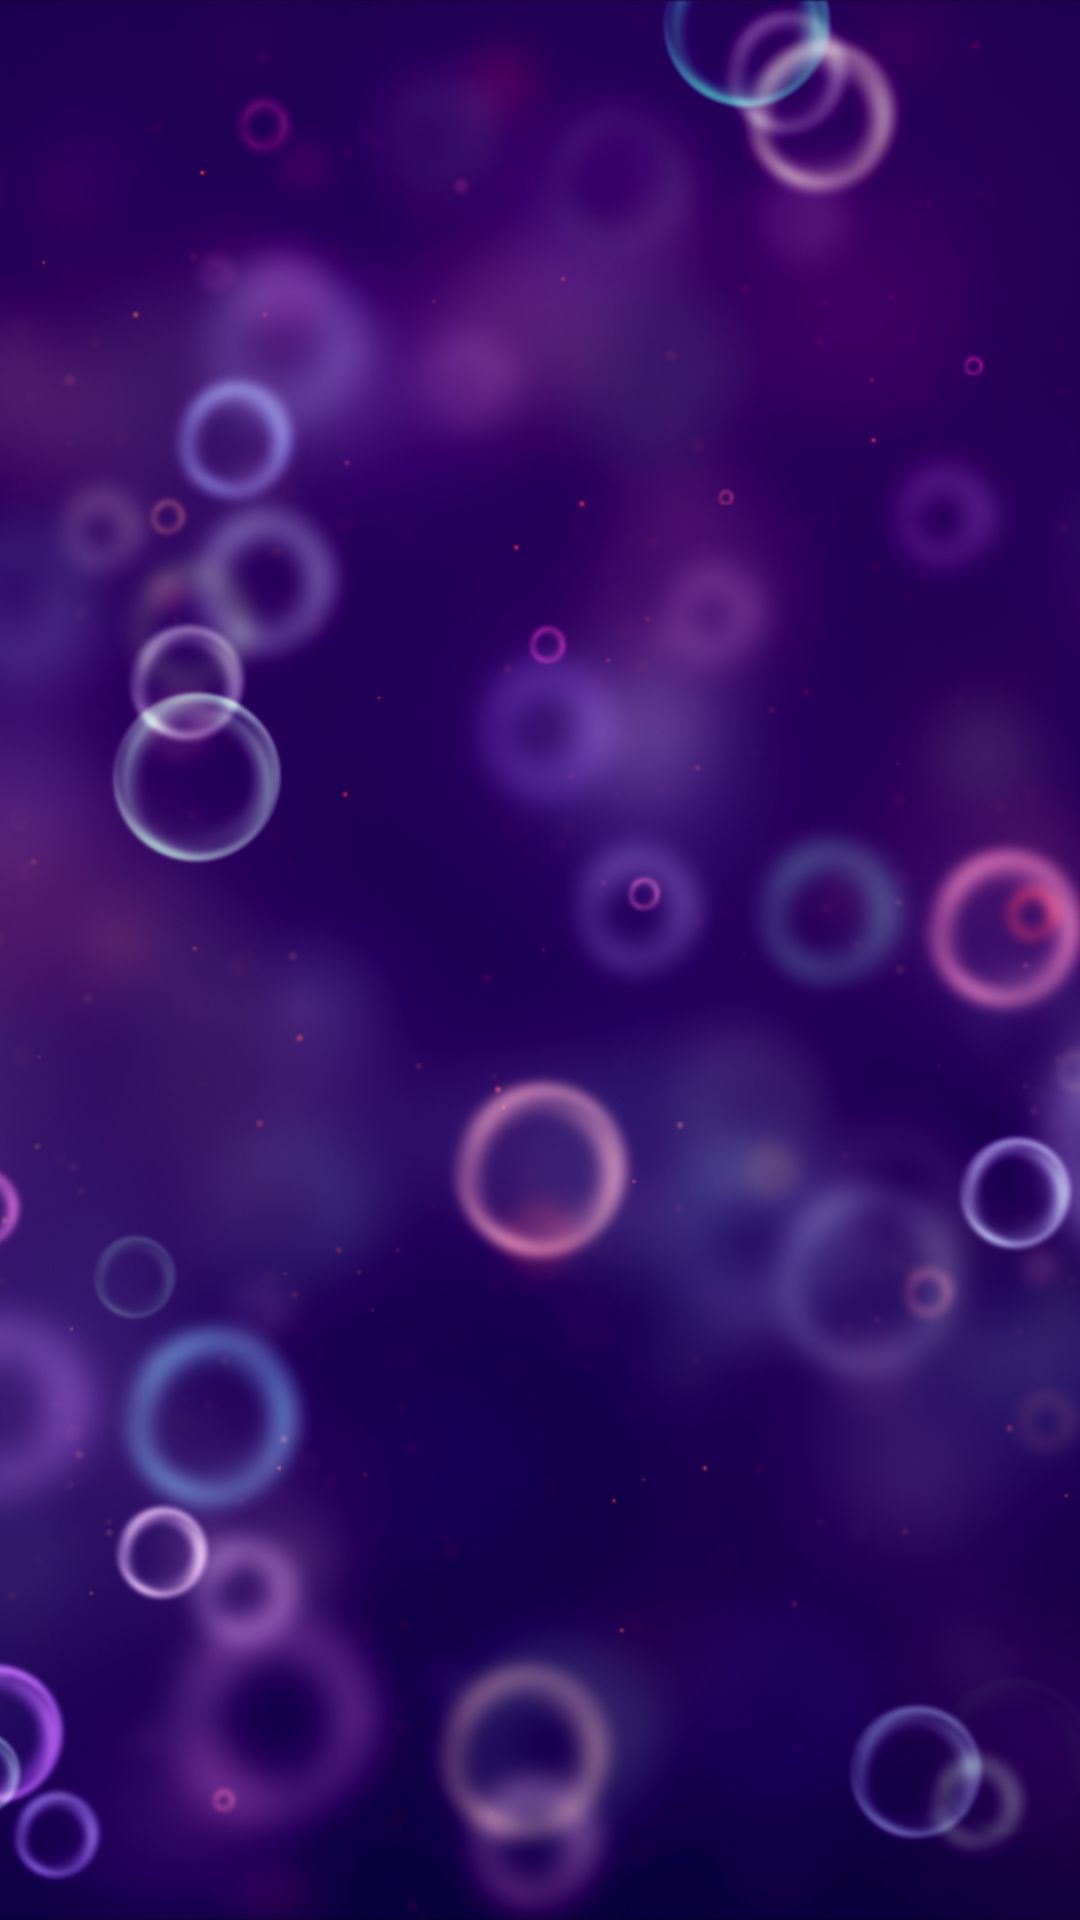 Abstract, purple, bubbles wallpaper. Bubbles wallpaper, Purple wallpaper, Wallpaper edge